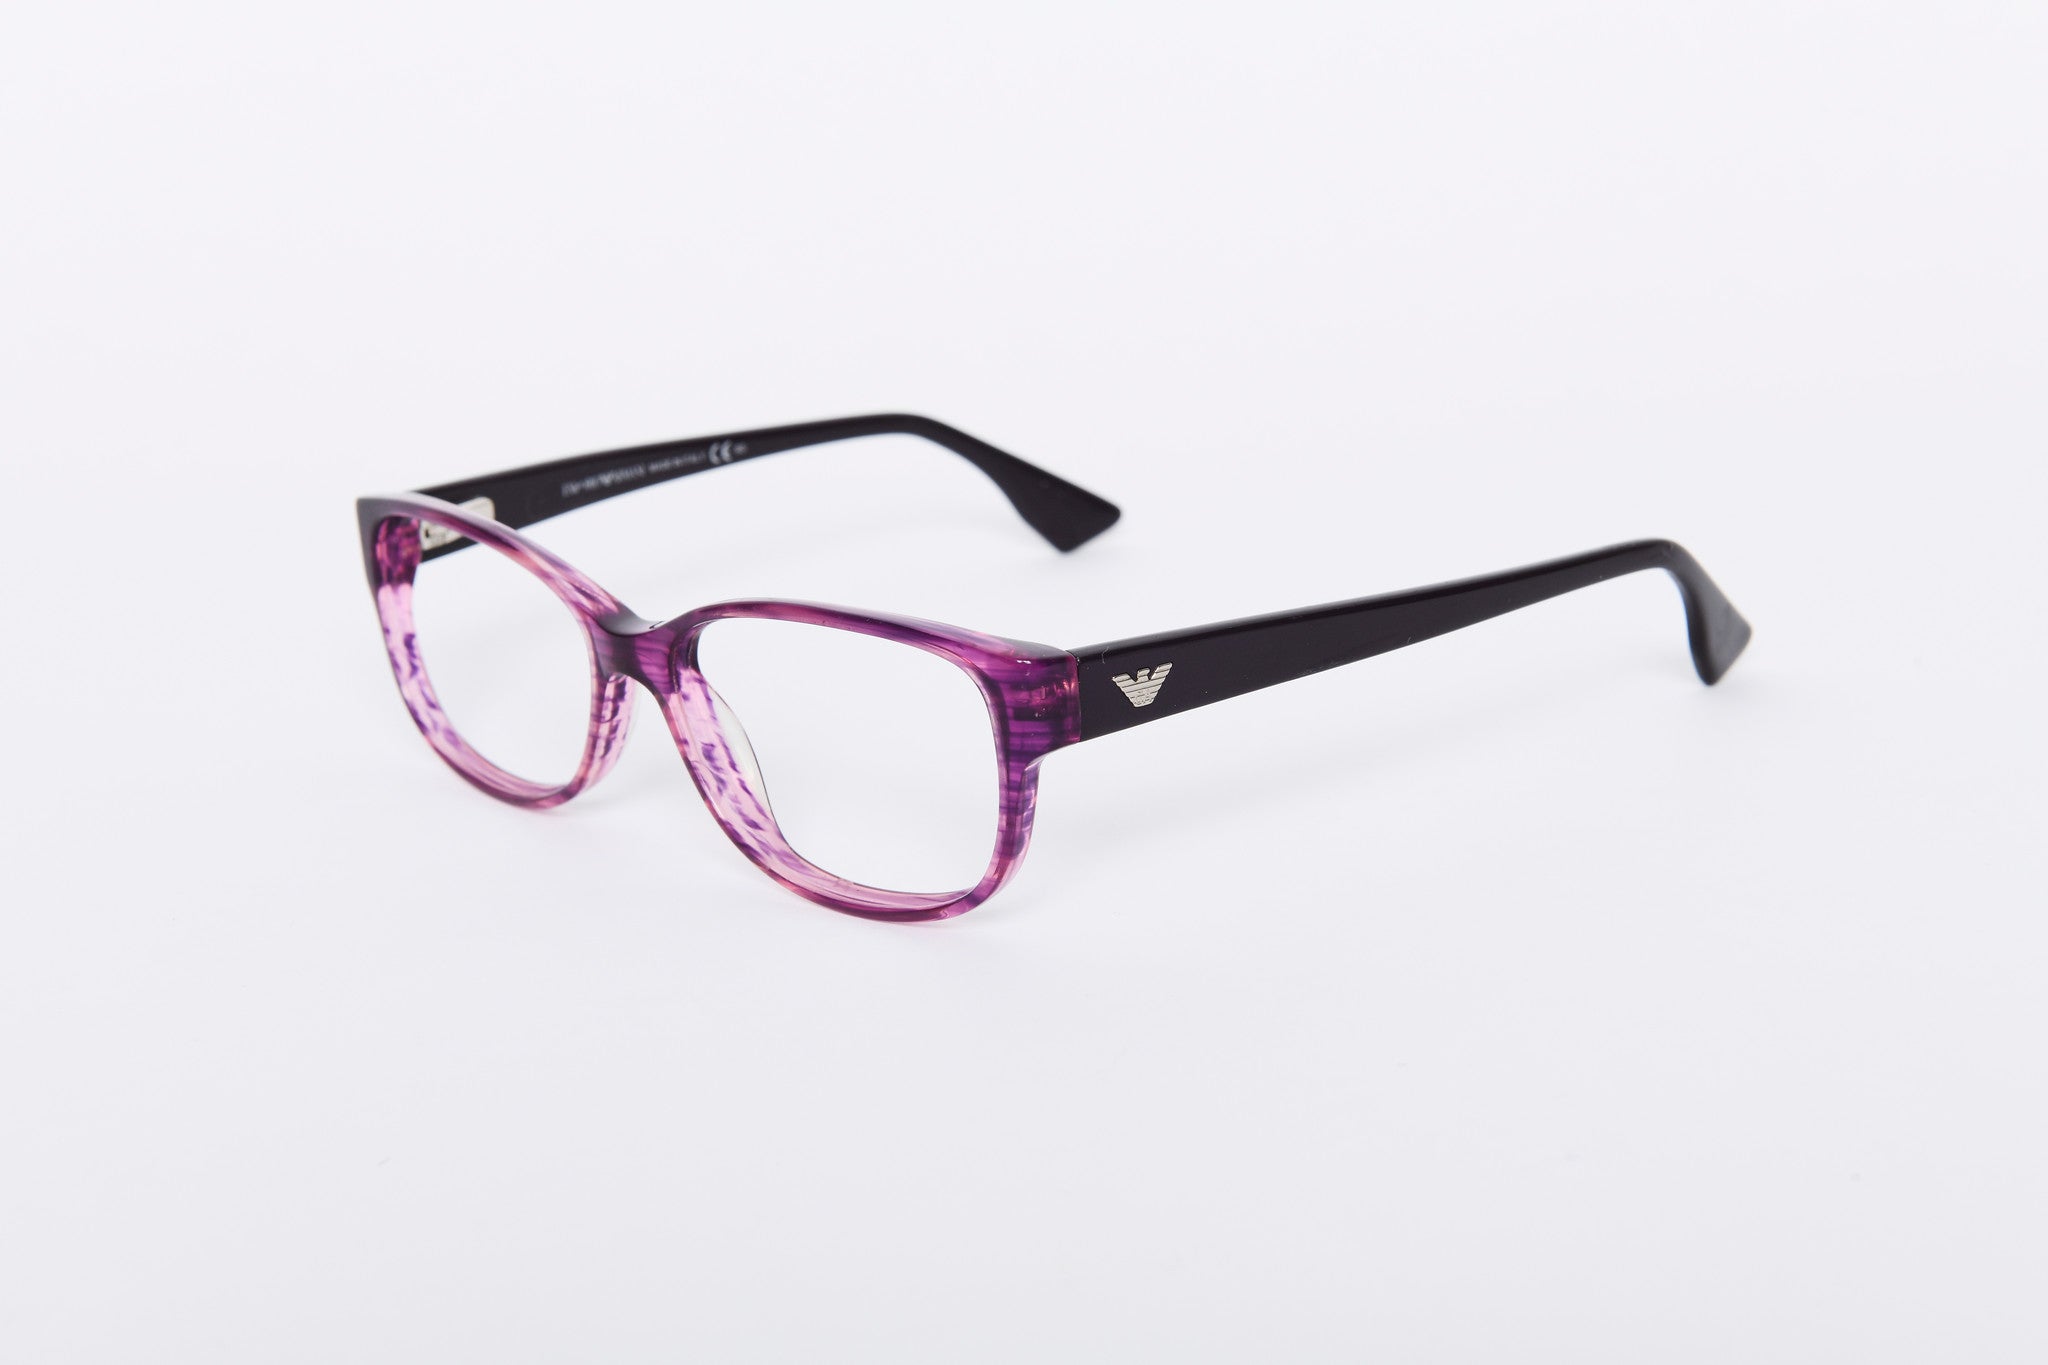 Emporio Armani 9640 glasses. Designer glasses. Cheap Emporio Armani vintage glasses. Prescription designer glasses.